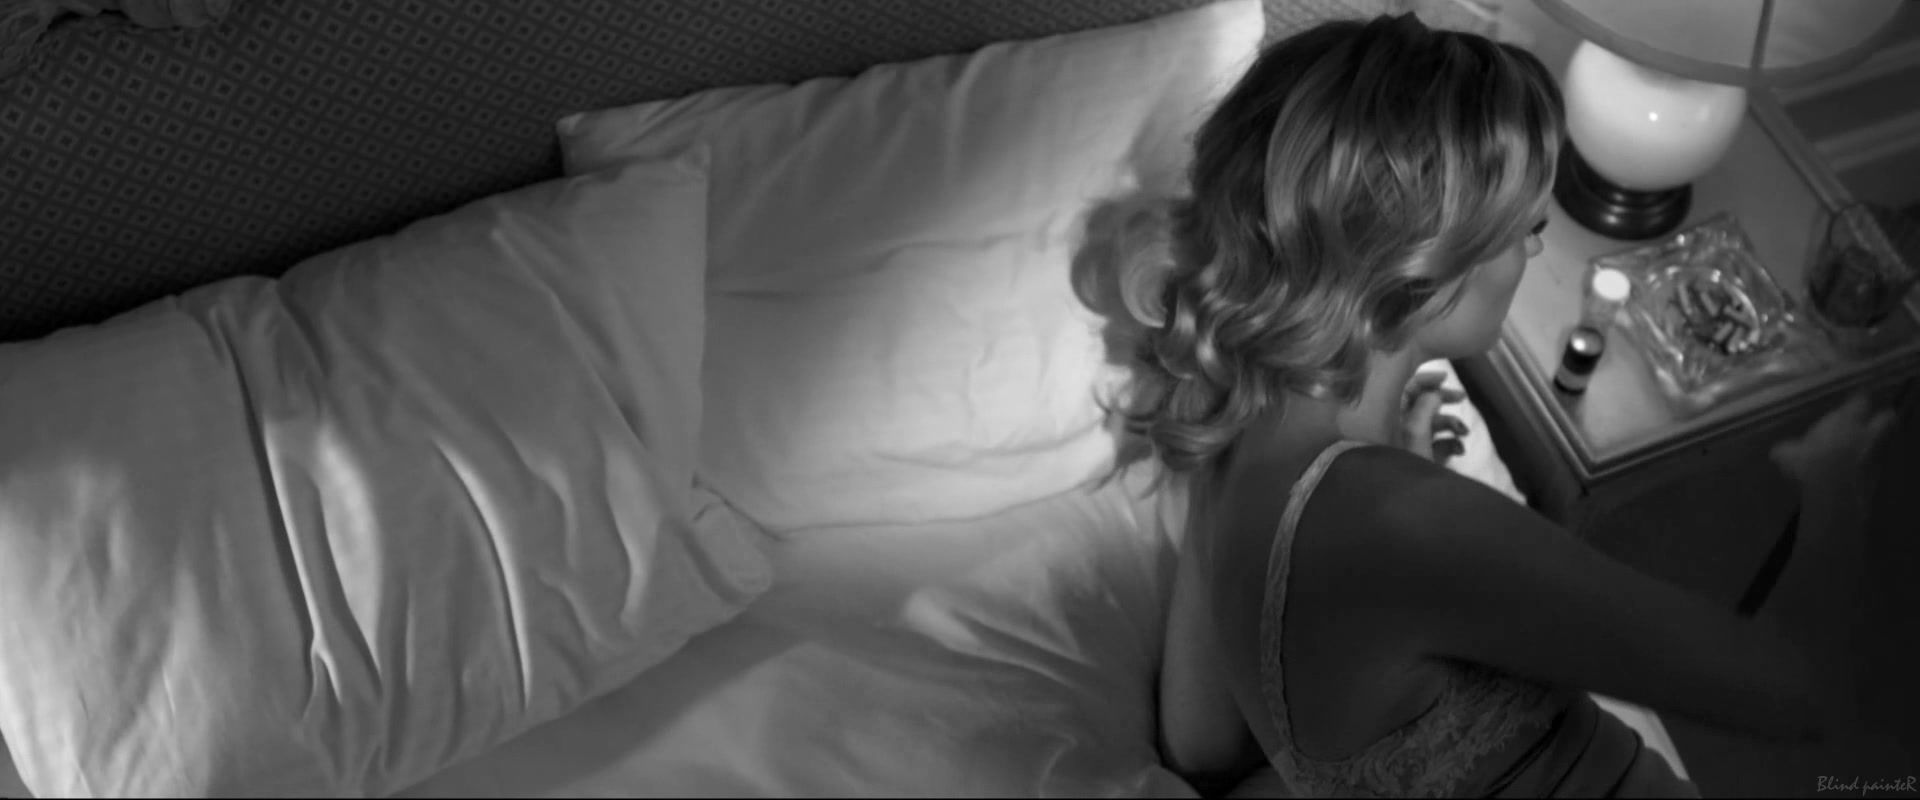 Pigtails Sex video Malin Akerman nude - Hotel Noir (2012) RealGirls